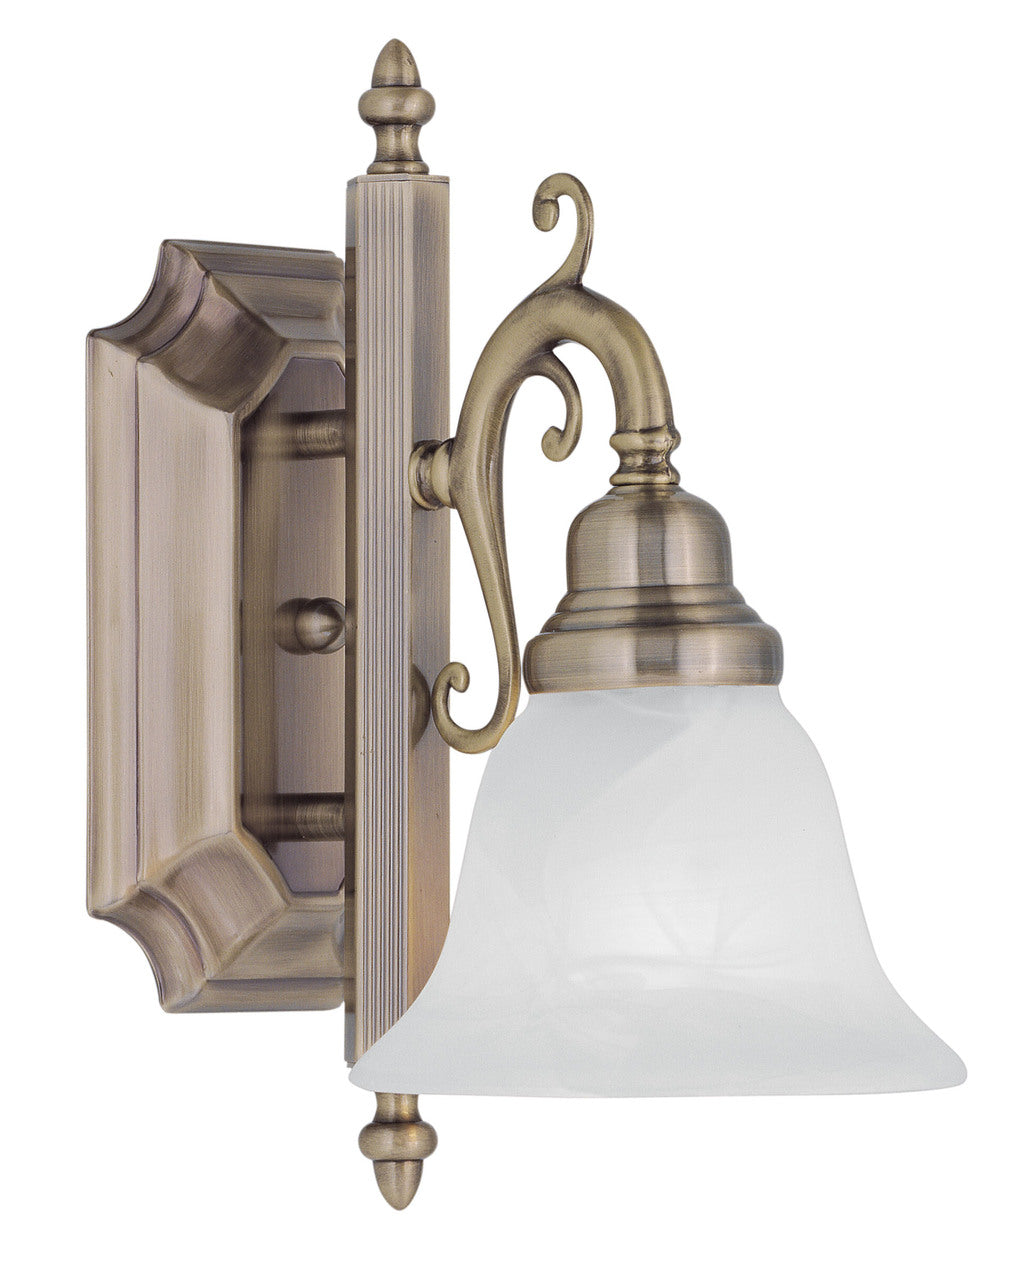 LIVEX Lighting 1281-01 French Regency Bath Light in Antique Brass (1 Light)